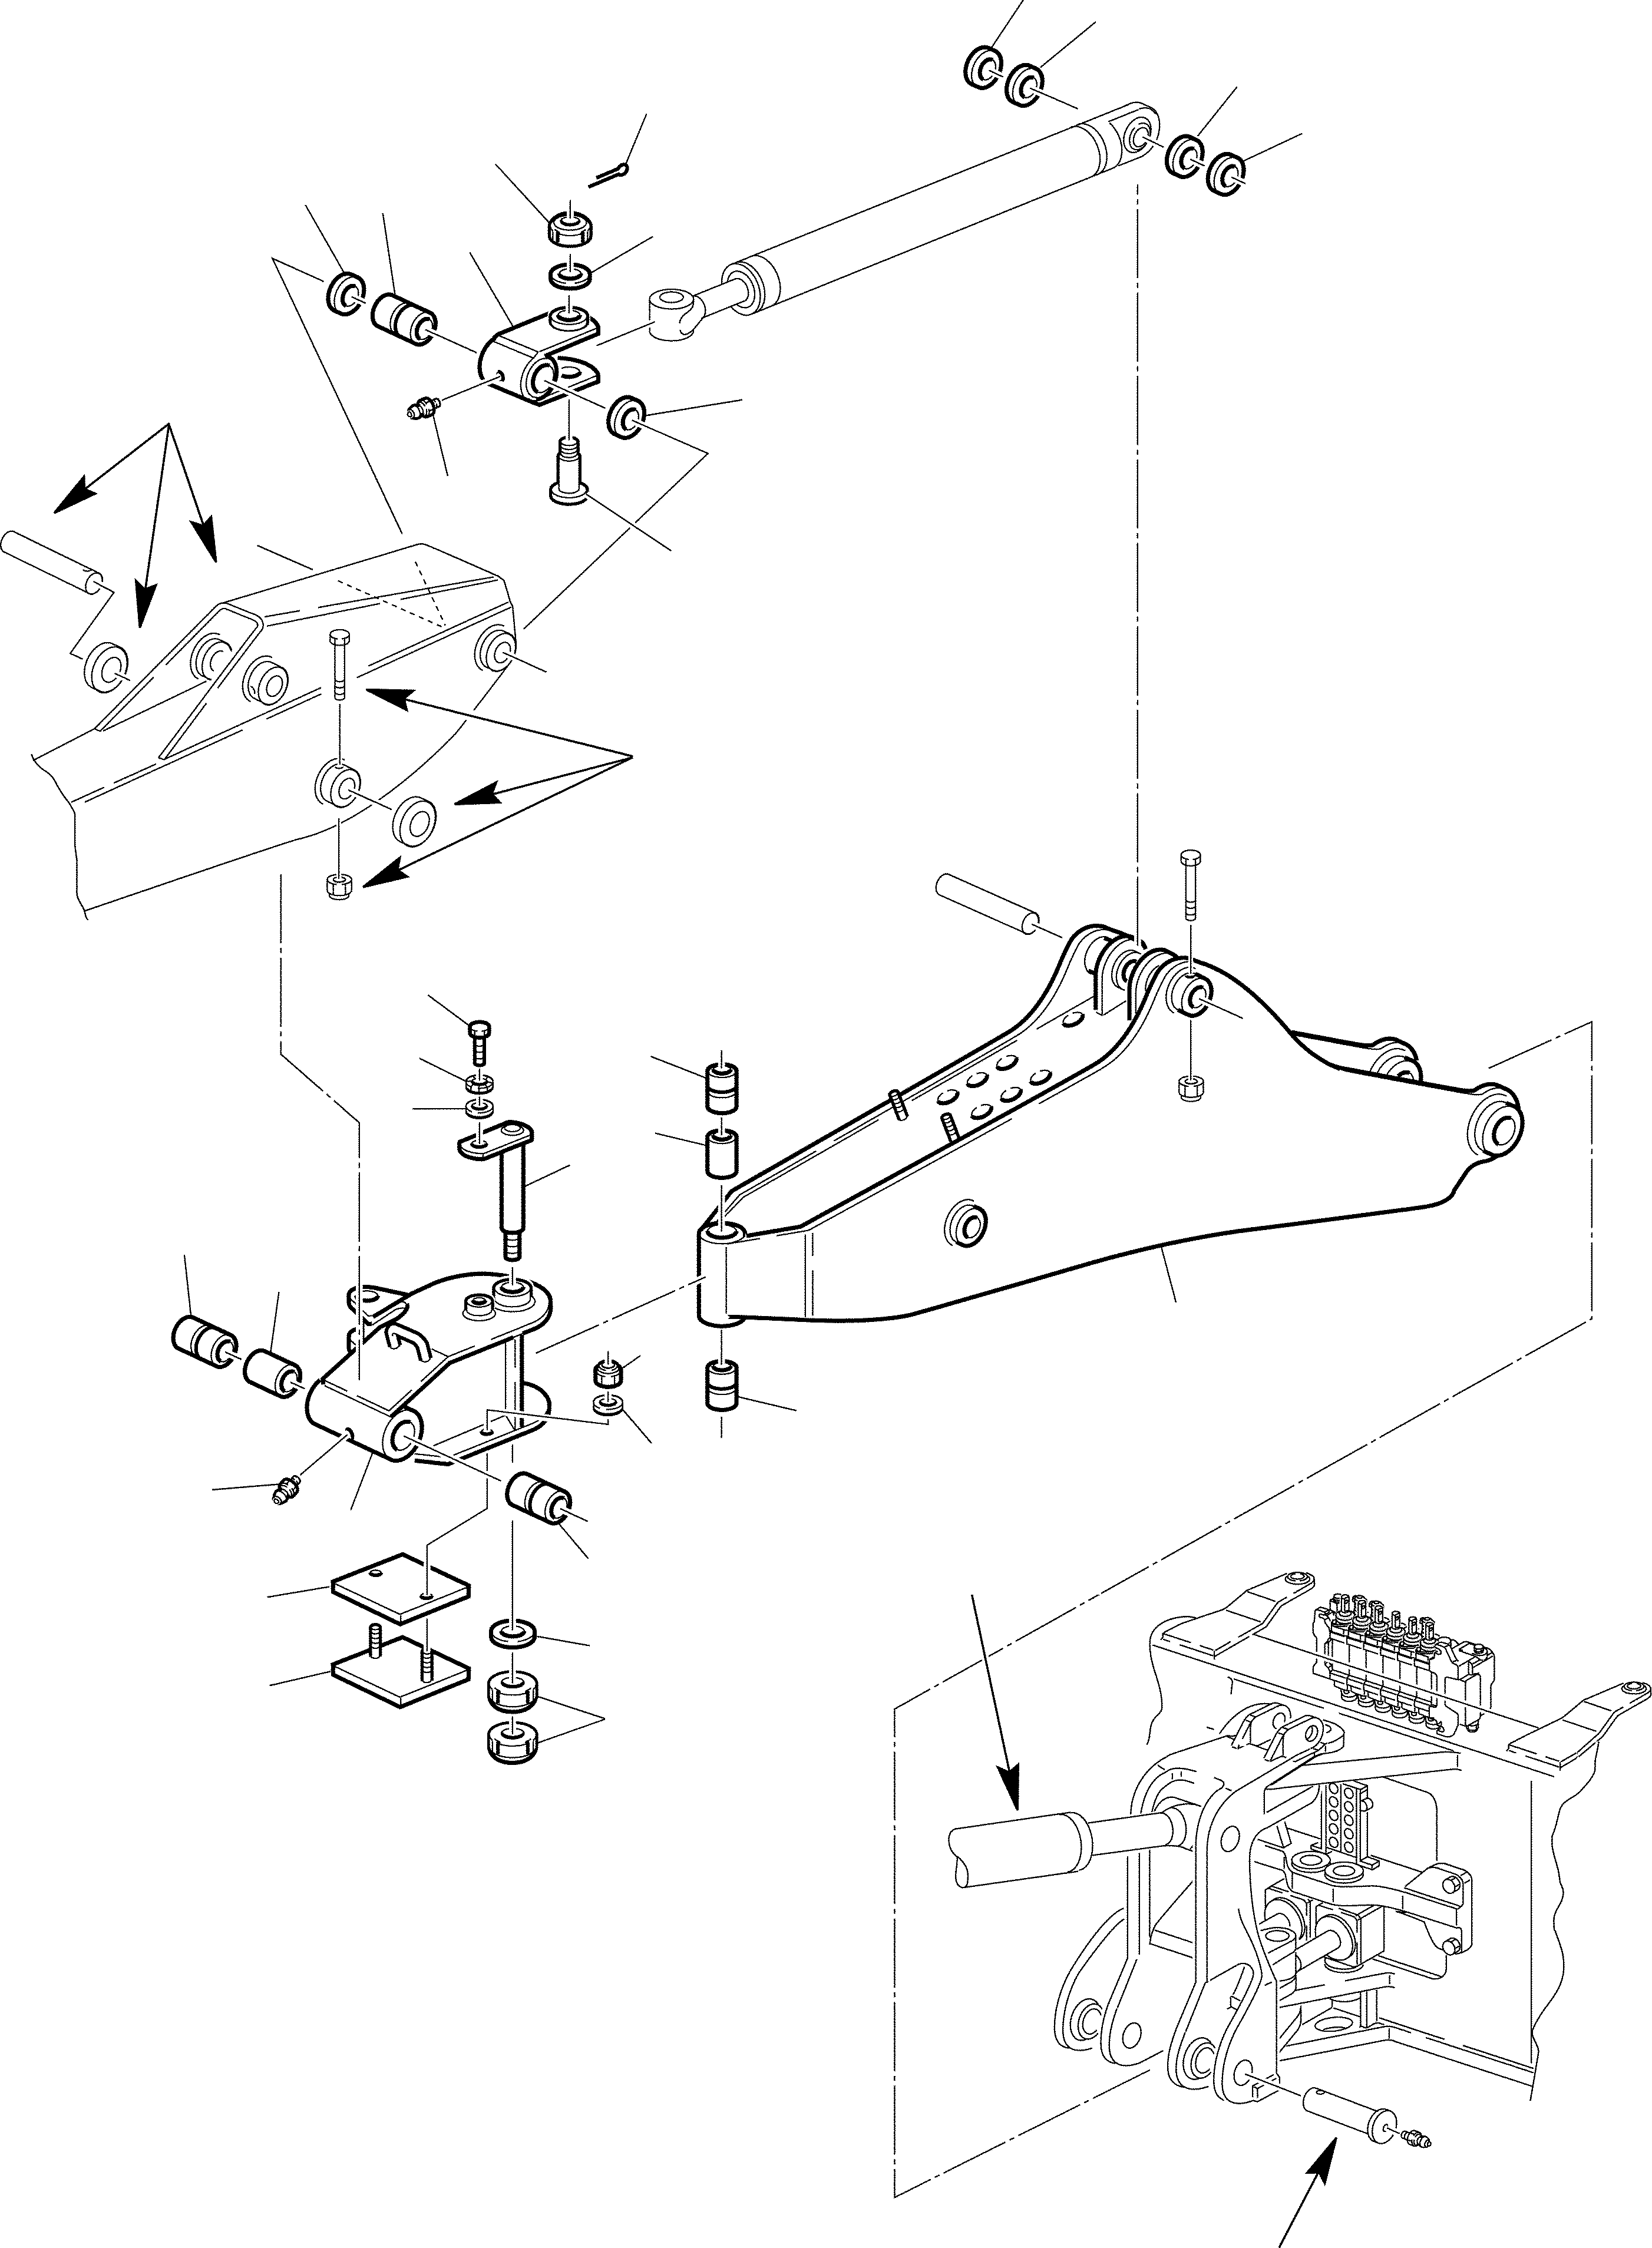 26. SIDE DIGGING BOOM [7150] - Komatsu part WB97S-2 S/N 97SF11205-Up [wb97s_2c]